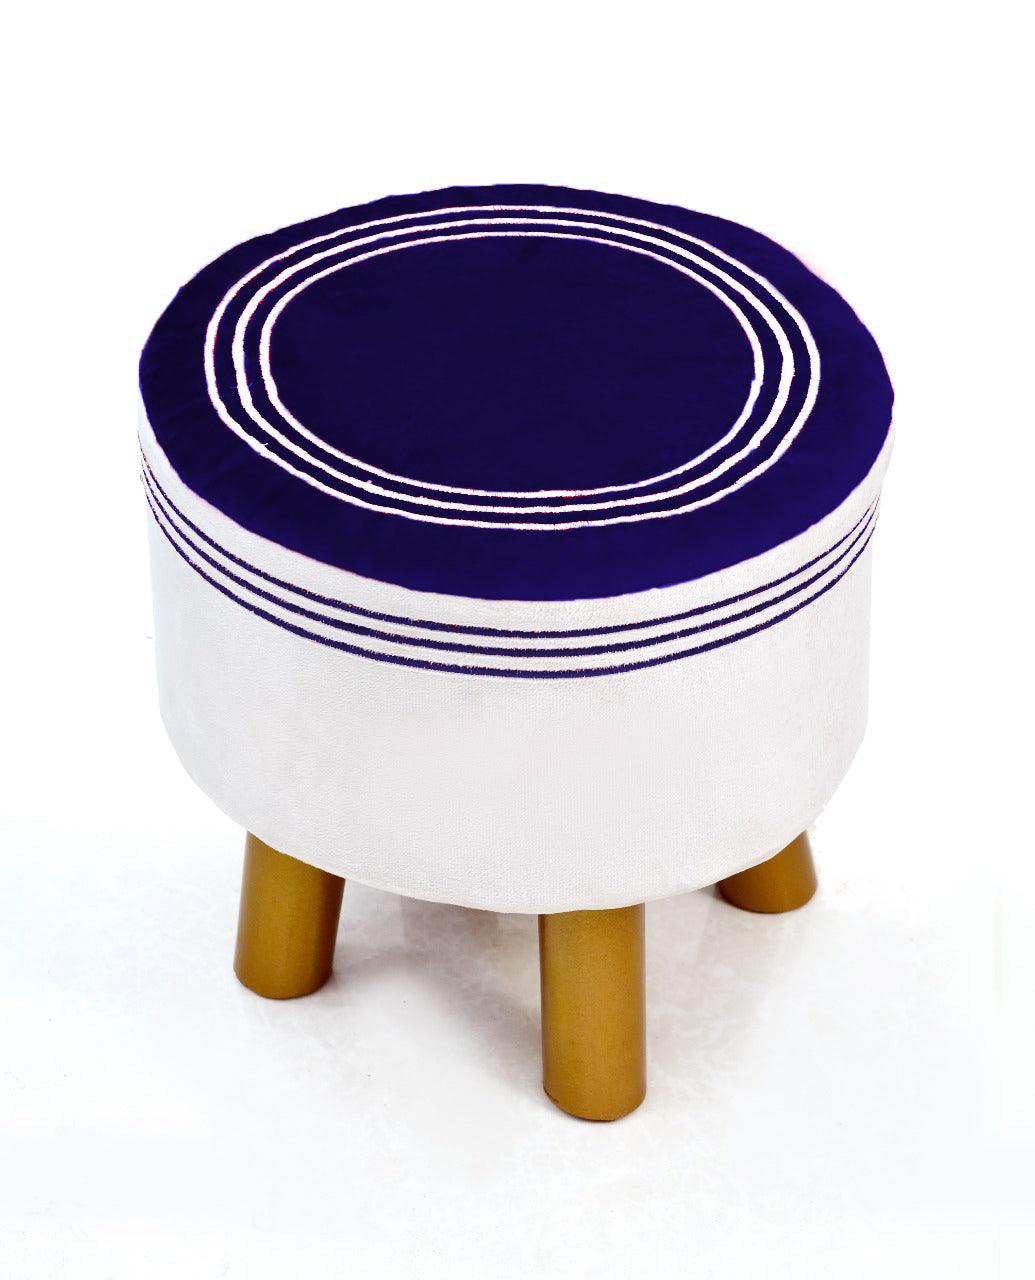 Wooden stool round shape-937 - 92Bedding